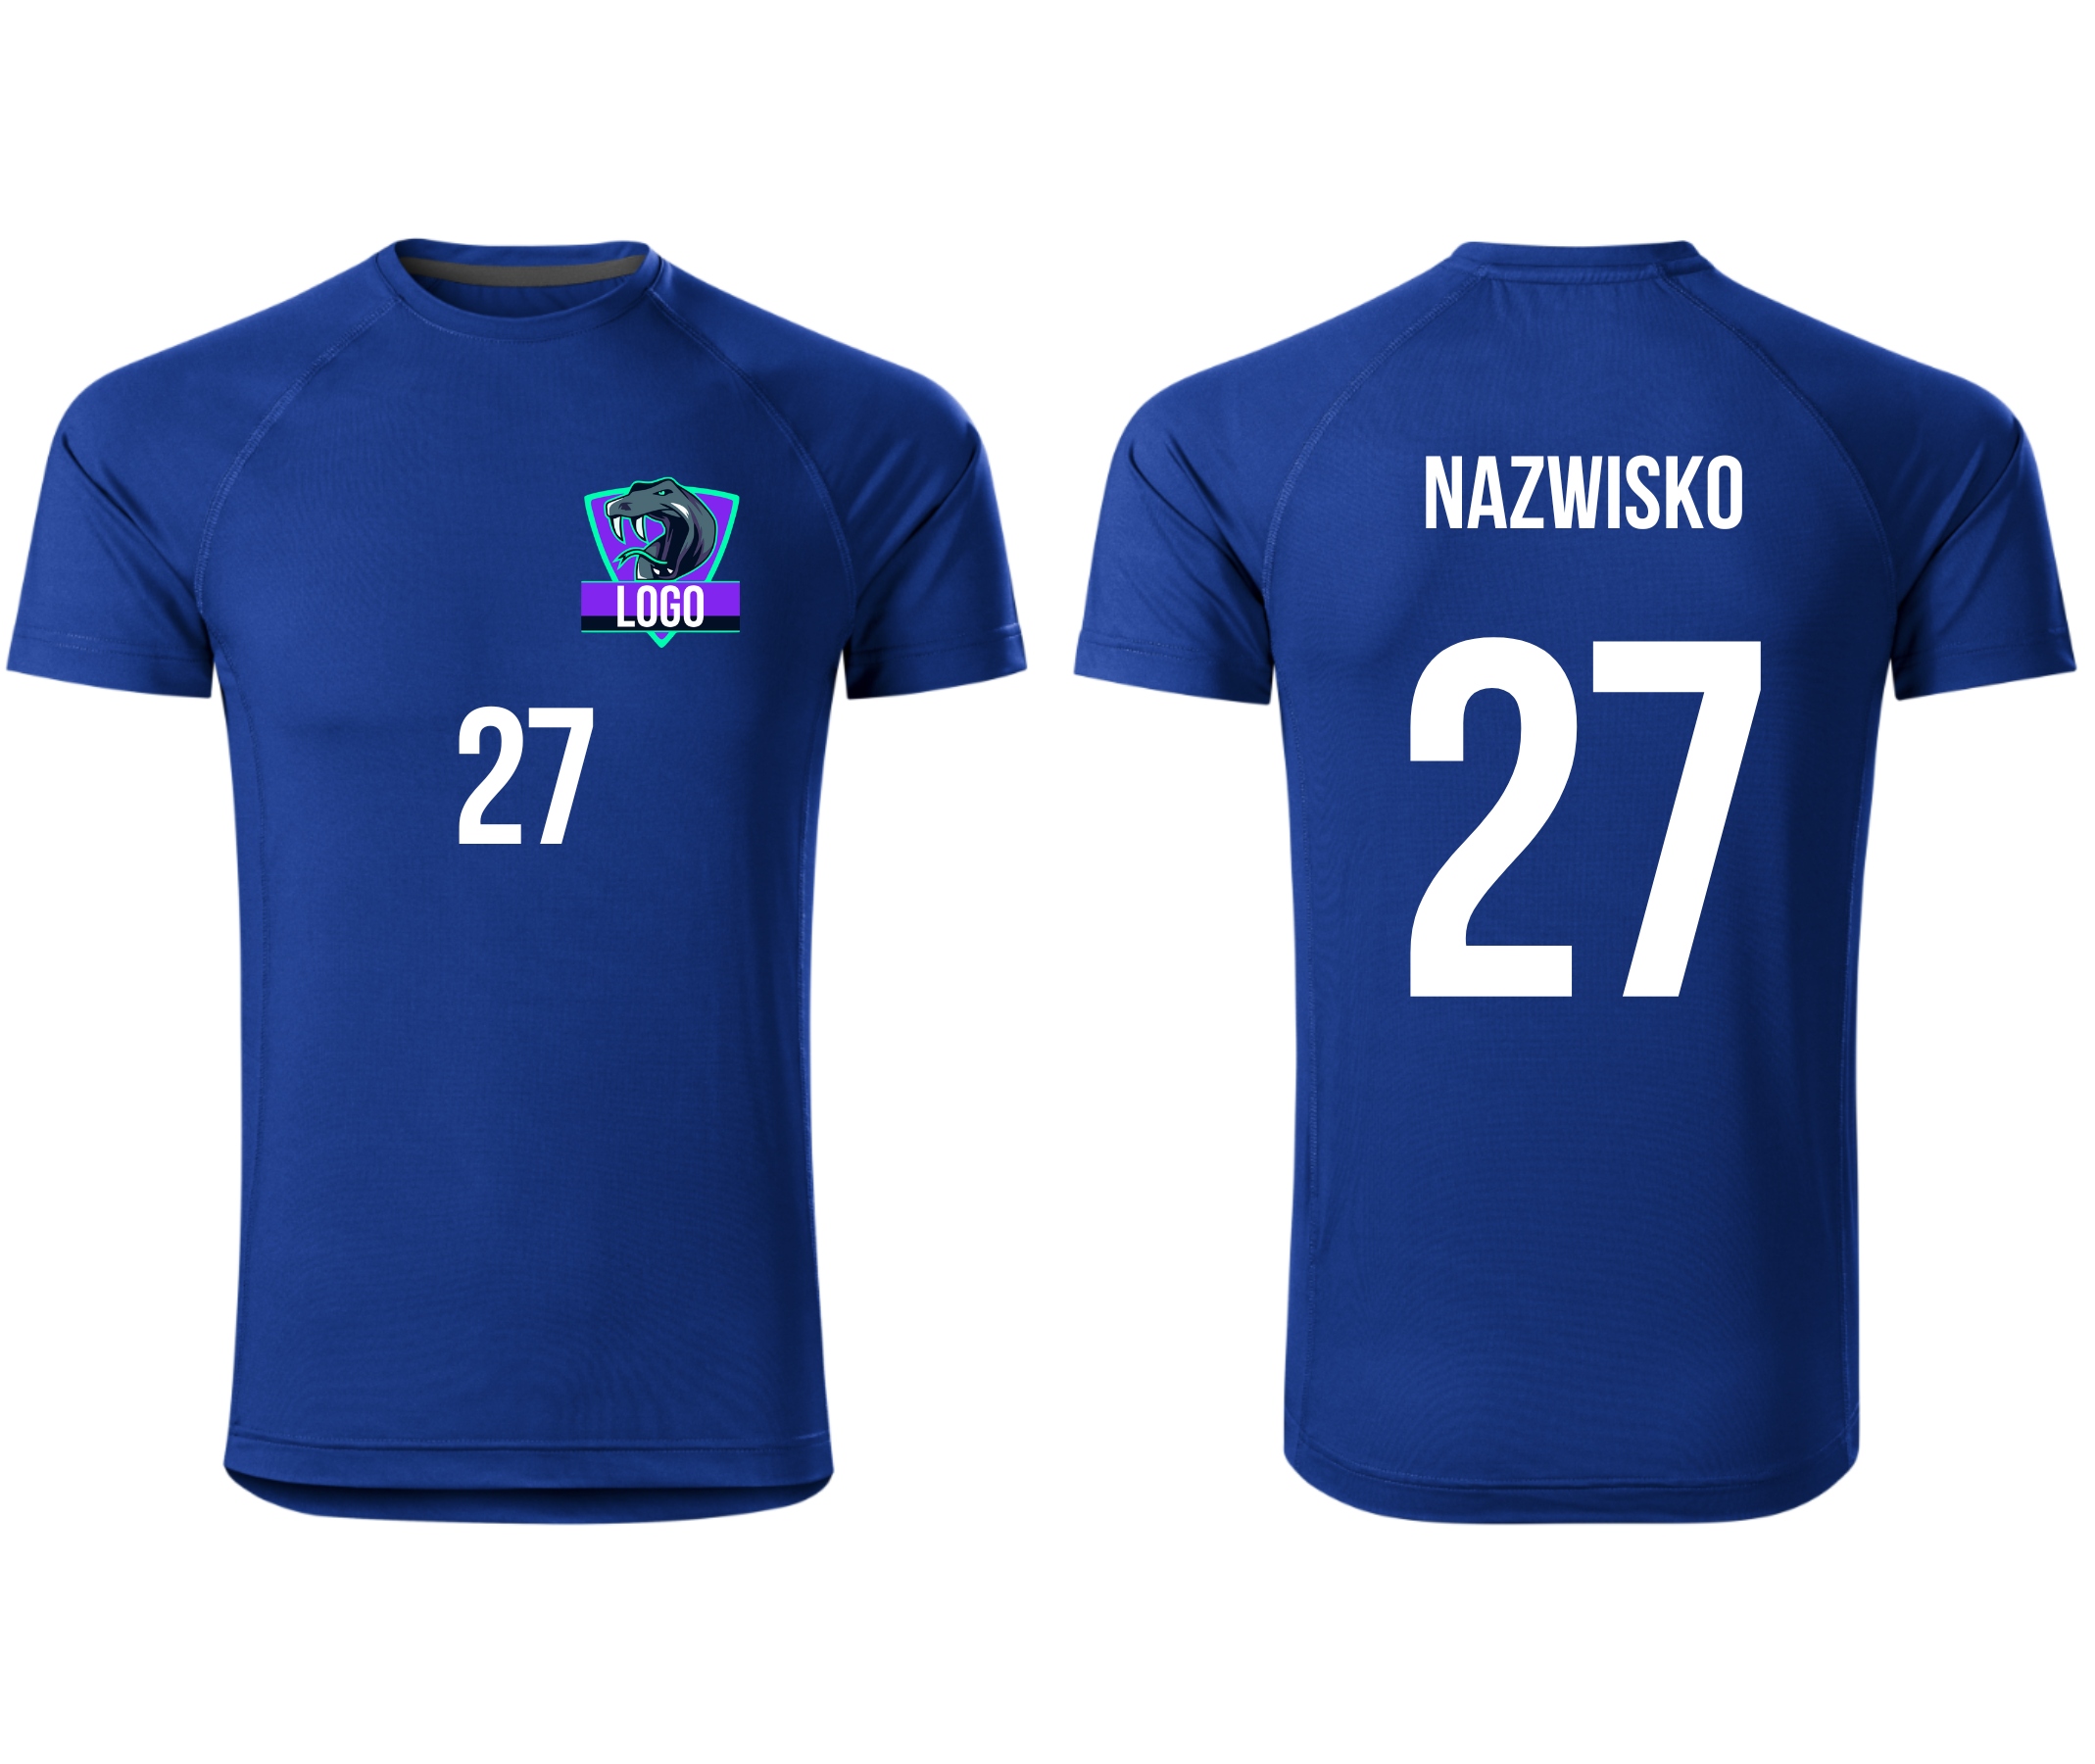 Športové tričko Malfini s vaším logom